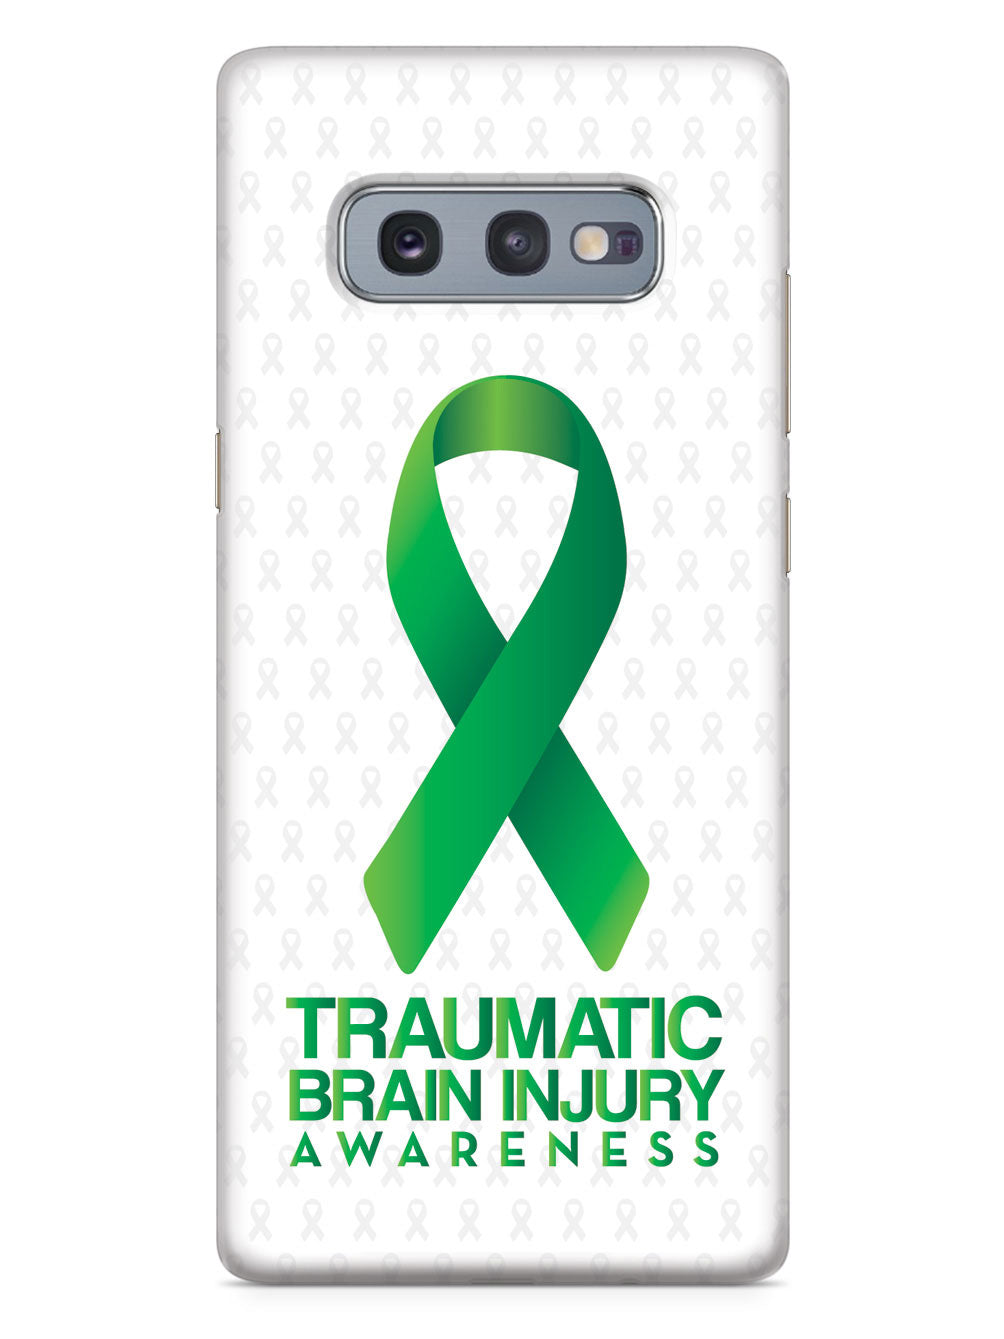 Traumatic Brain Injury - Awareness Ribbon - White Case